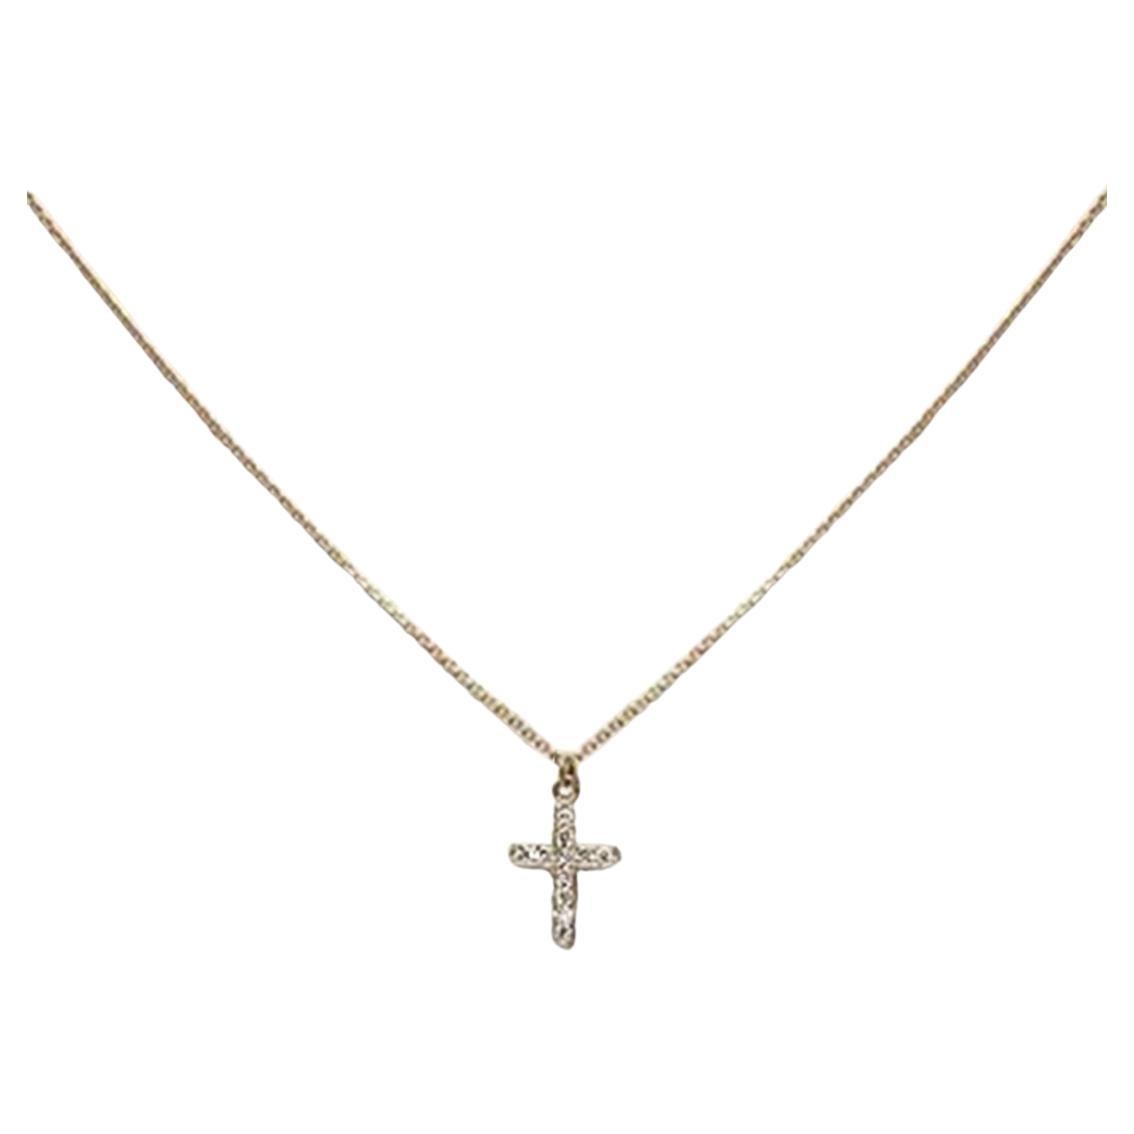 18k Gold Diamond Cross Necklace Cross Pendant Necklace